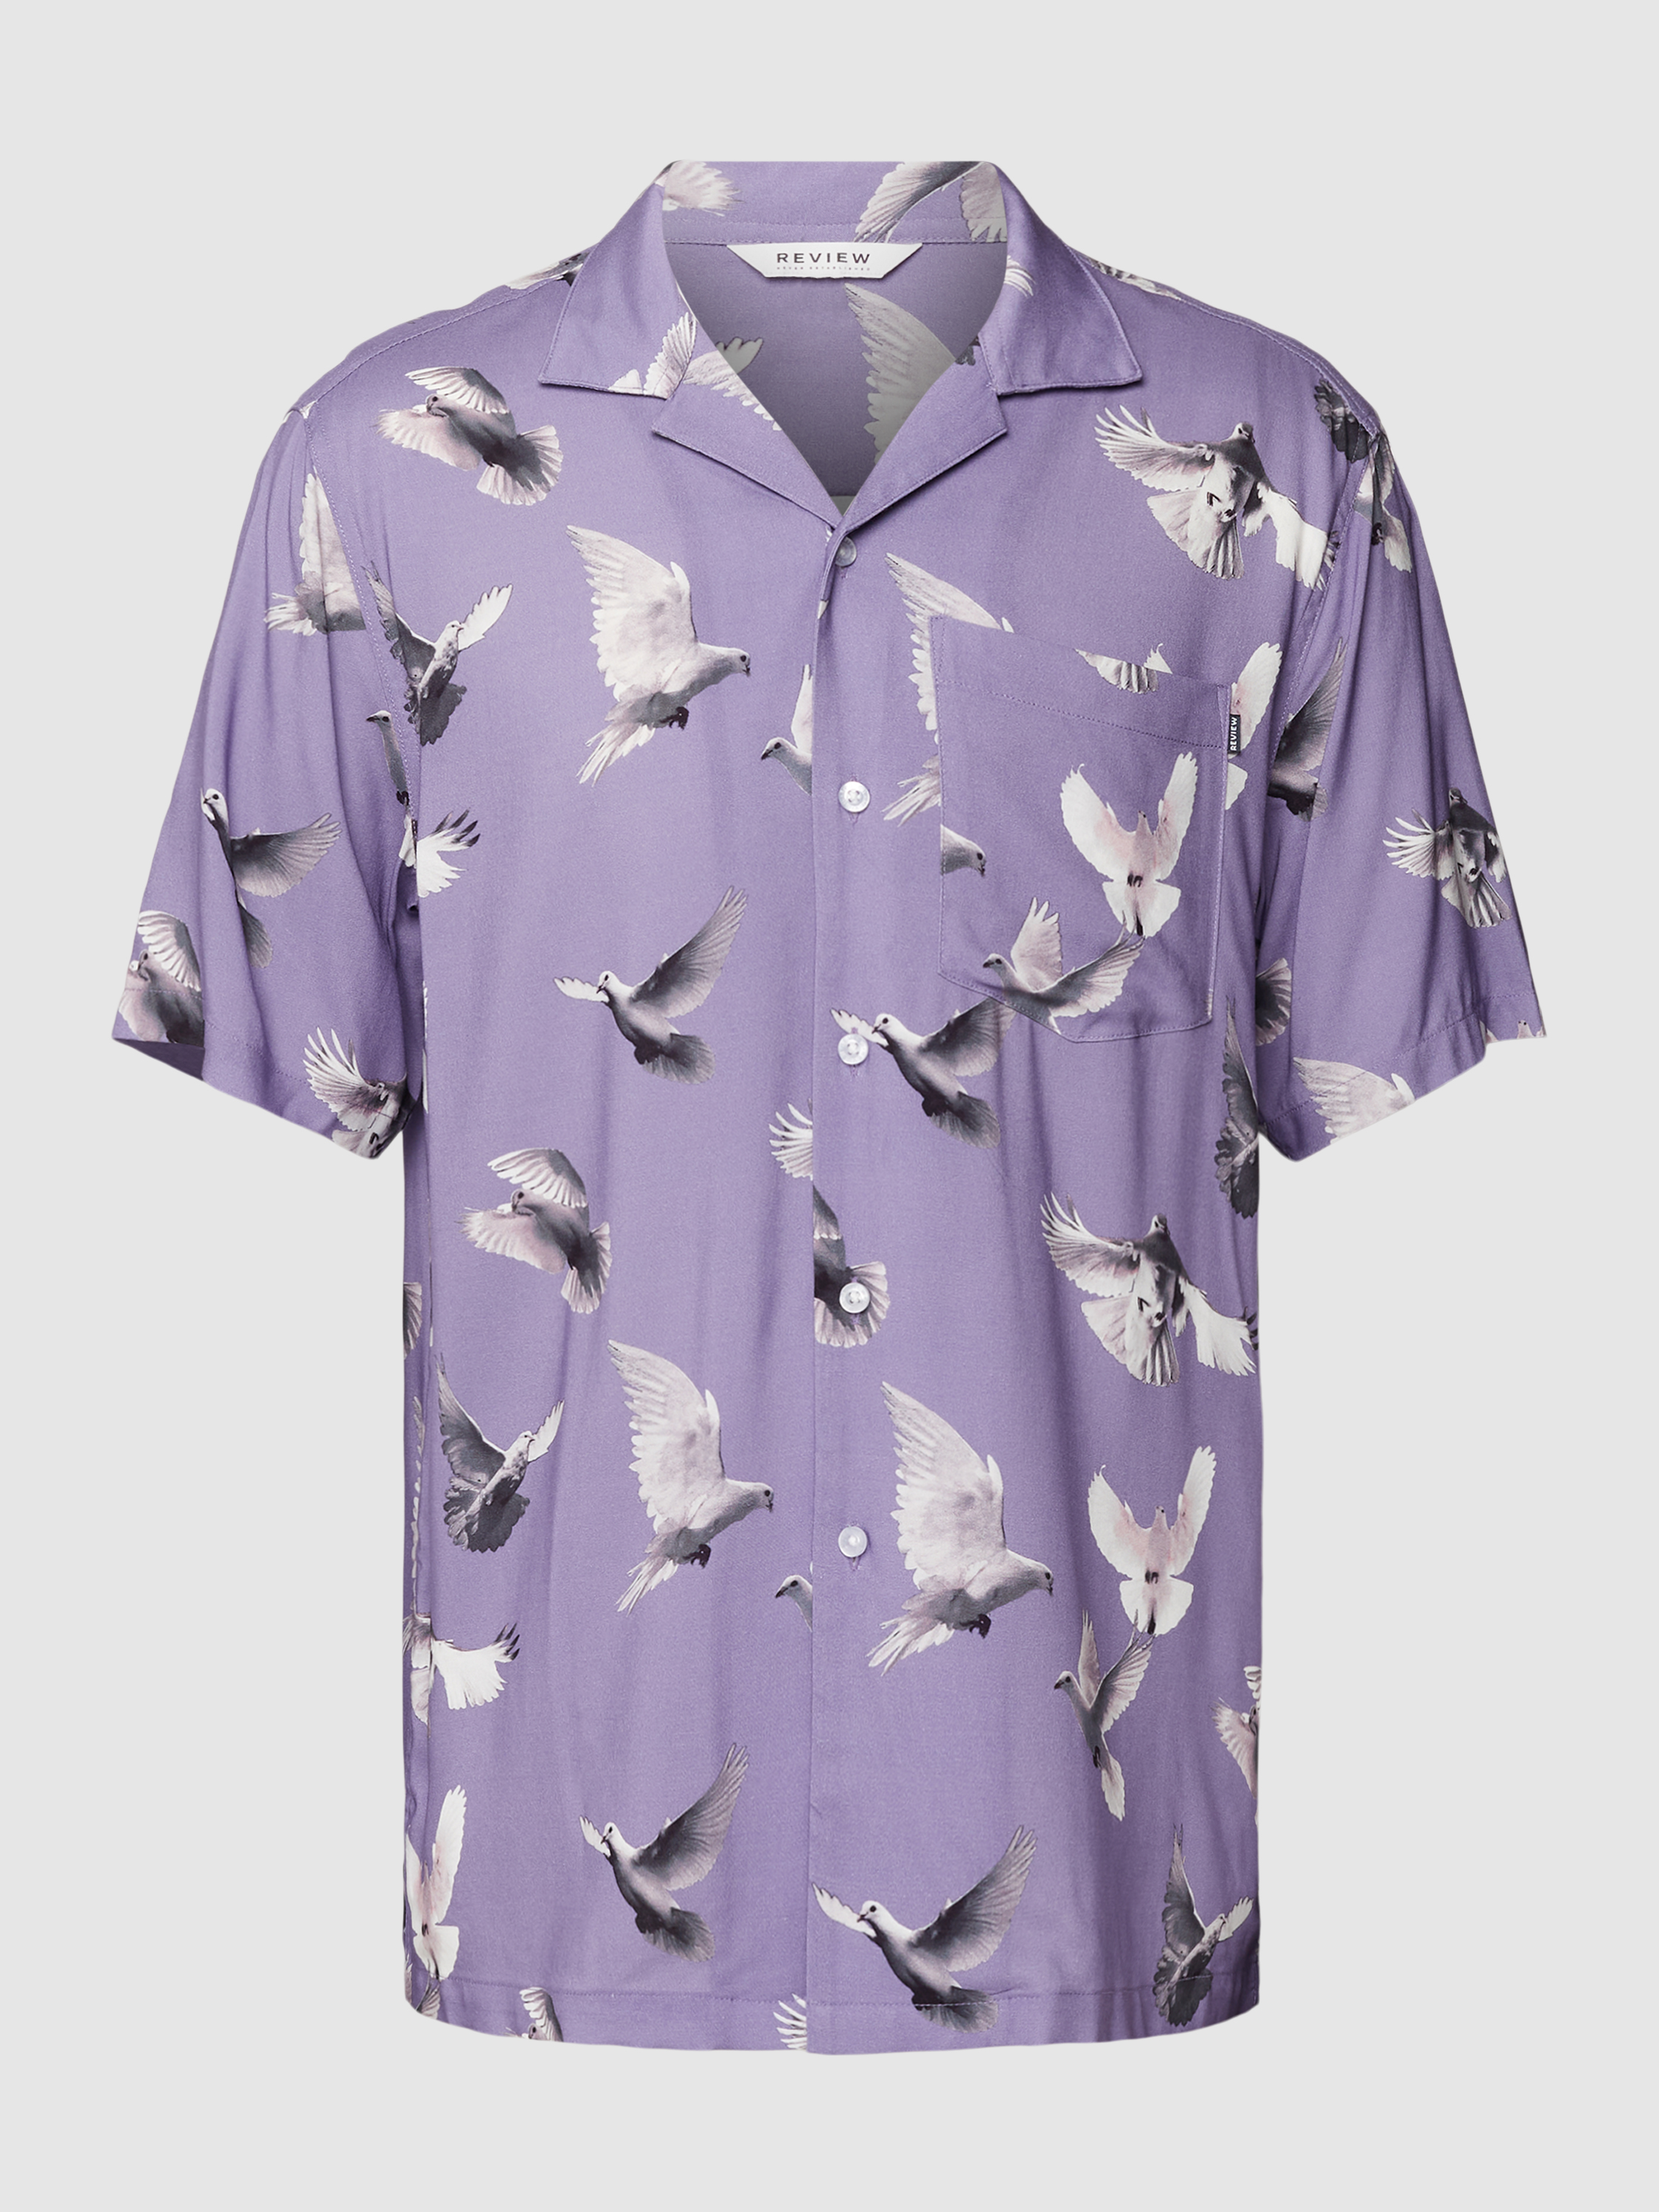 Рубашка мужская Review 1783523 фиолетовая XS (доставка из-за рубежа)